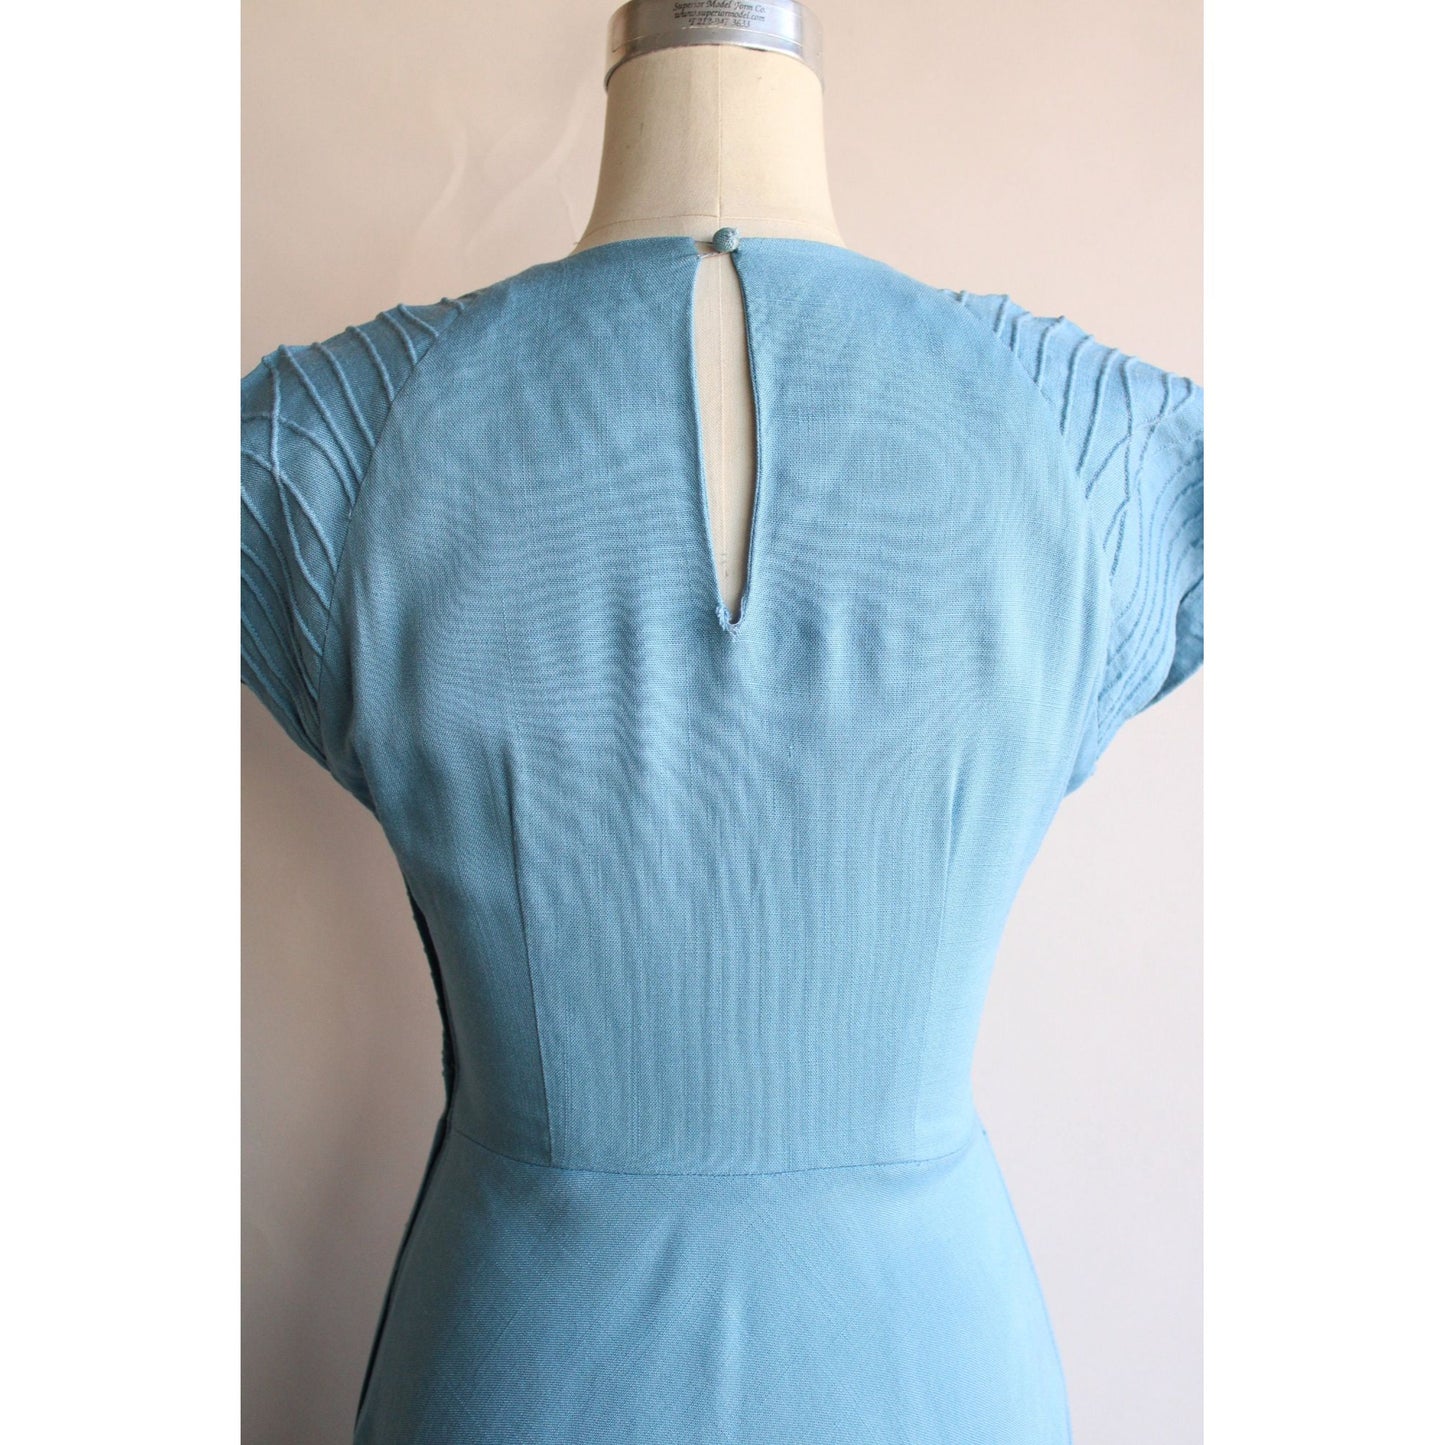 Vintage 1940s 1950s Dress / Sky Blue Woven Cotton  with Keyhole Back